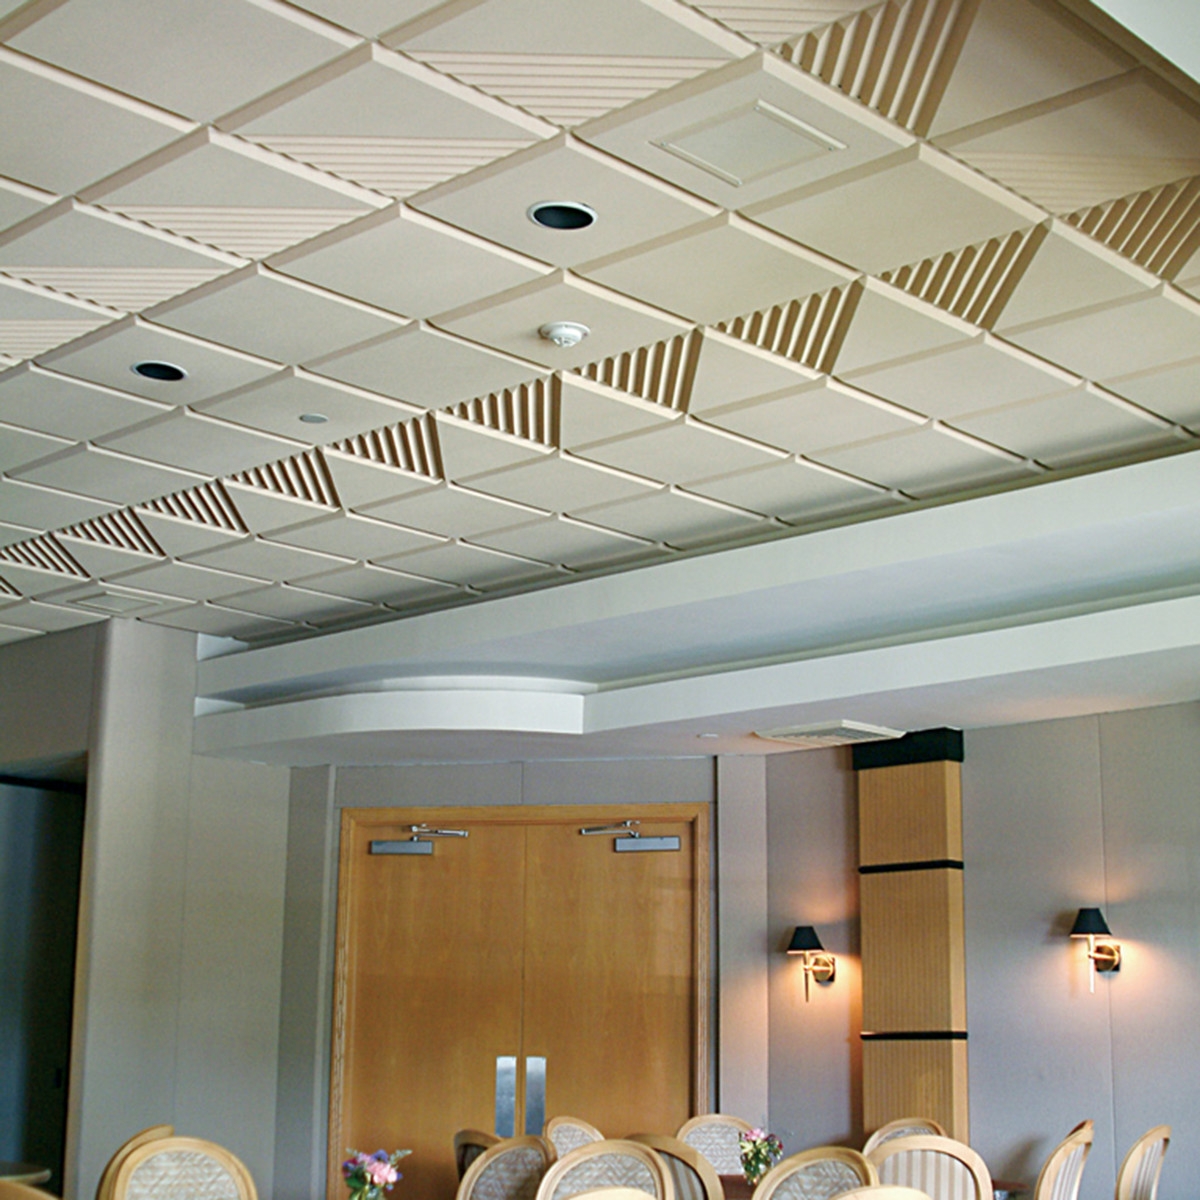 Standard Ceiling Tile Sizes